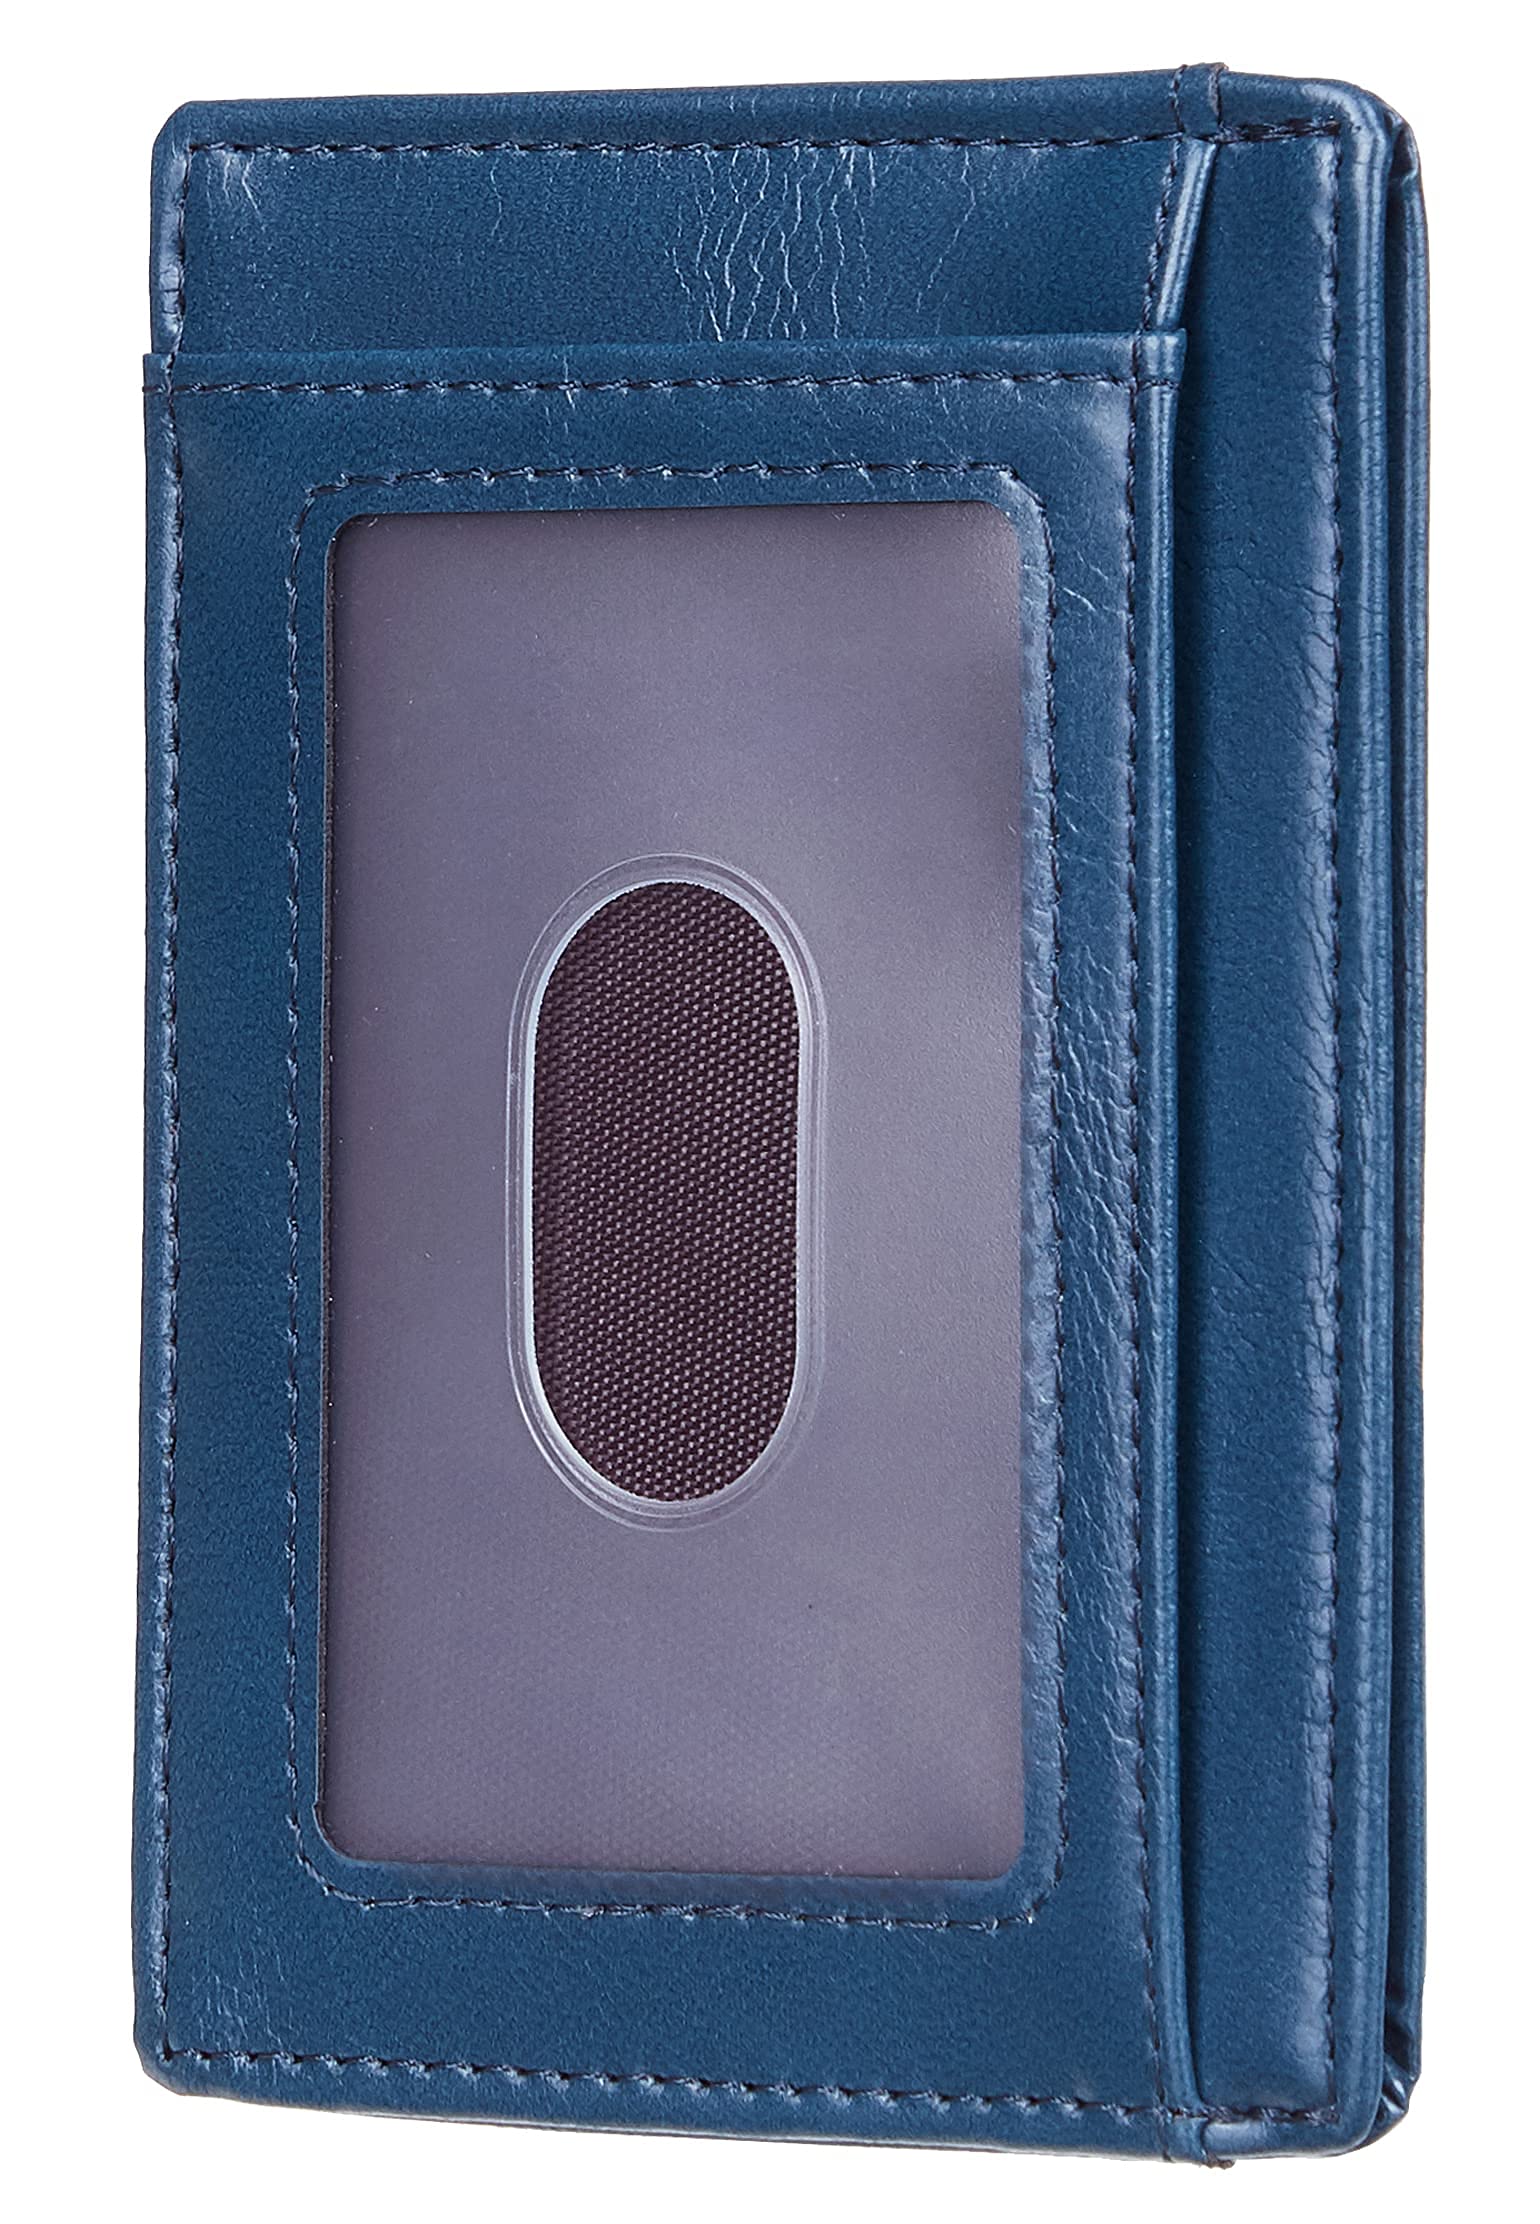 Travelambo Front Pocket Minimalist Leather Slim Wallet RFID Blocking